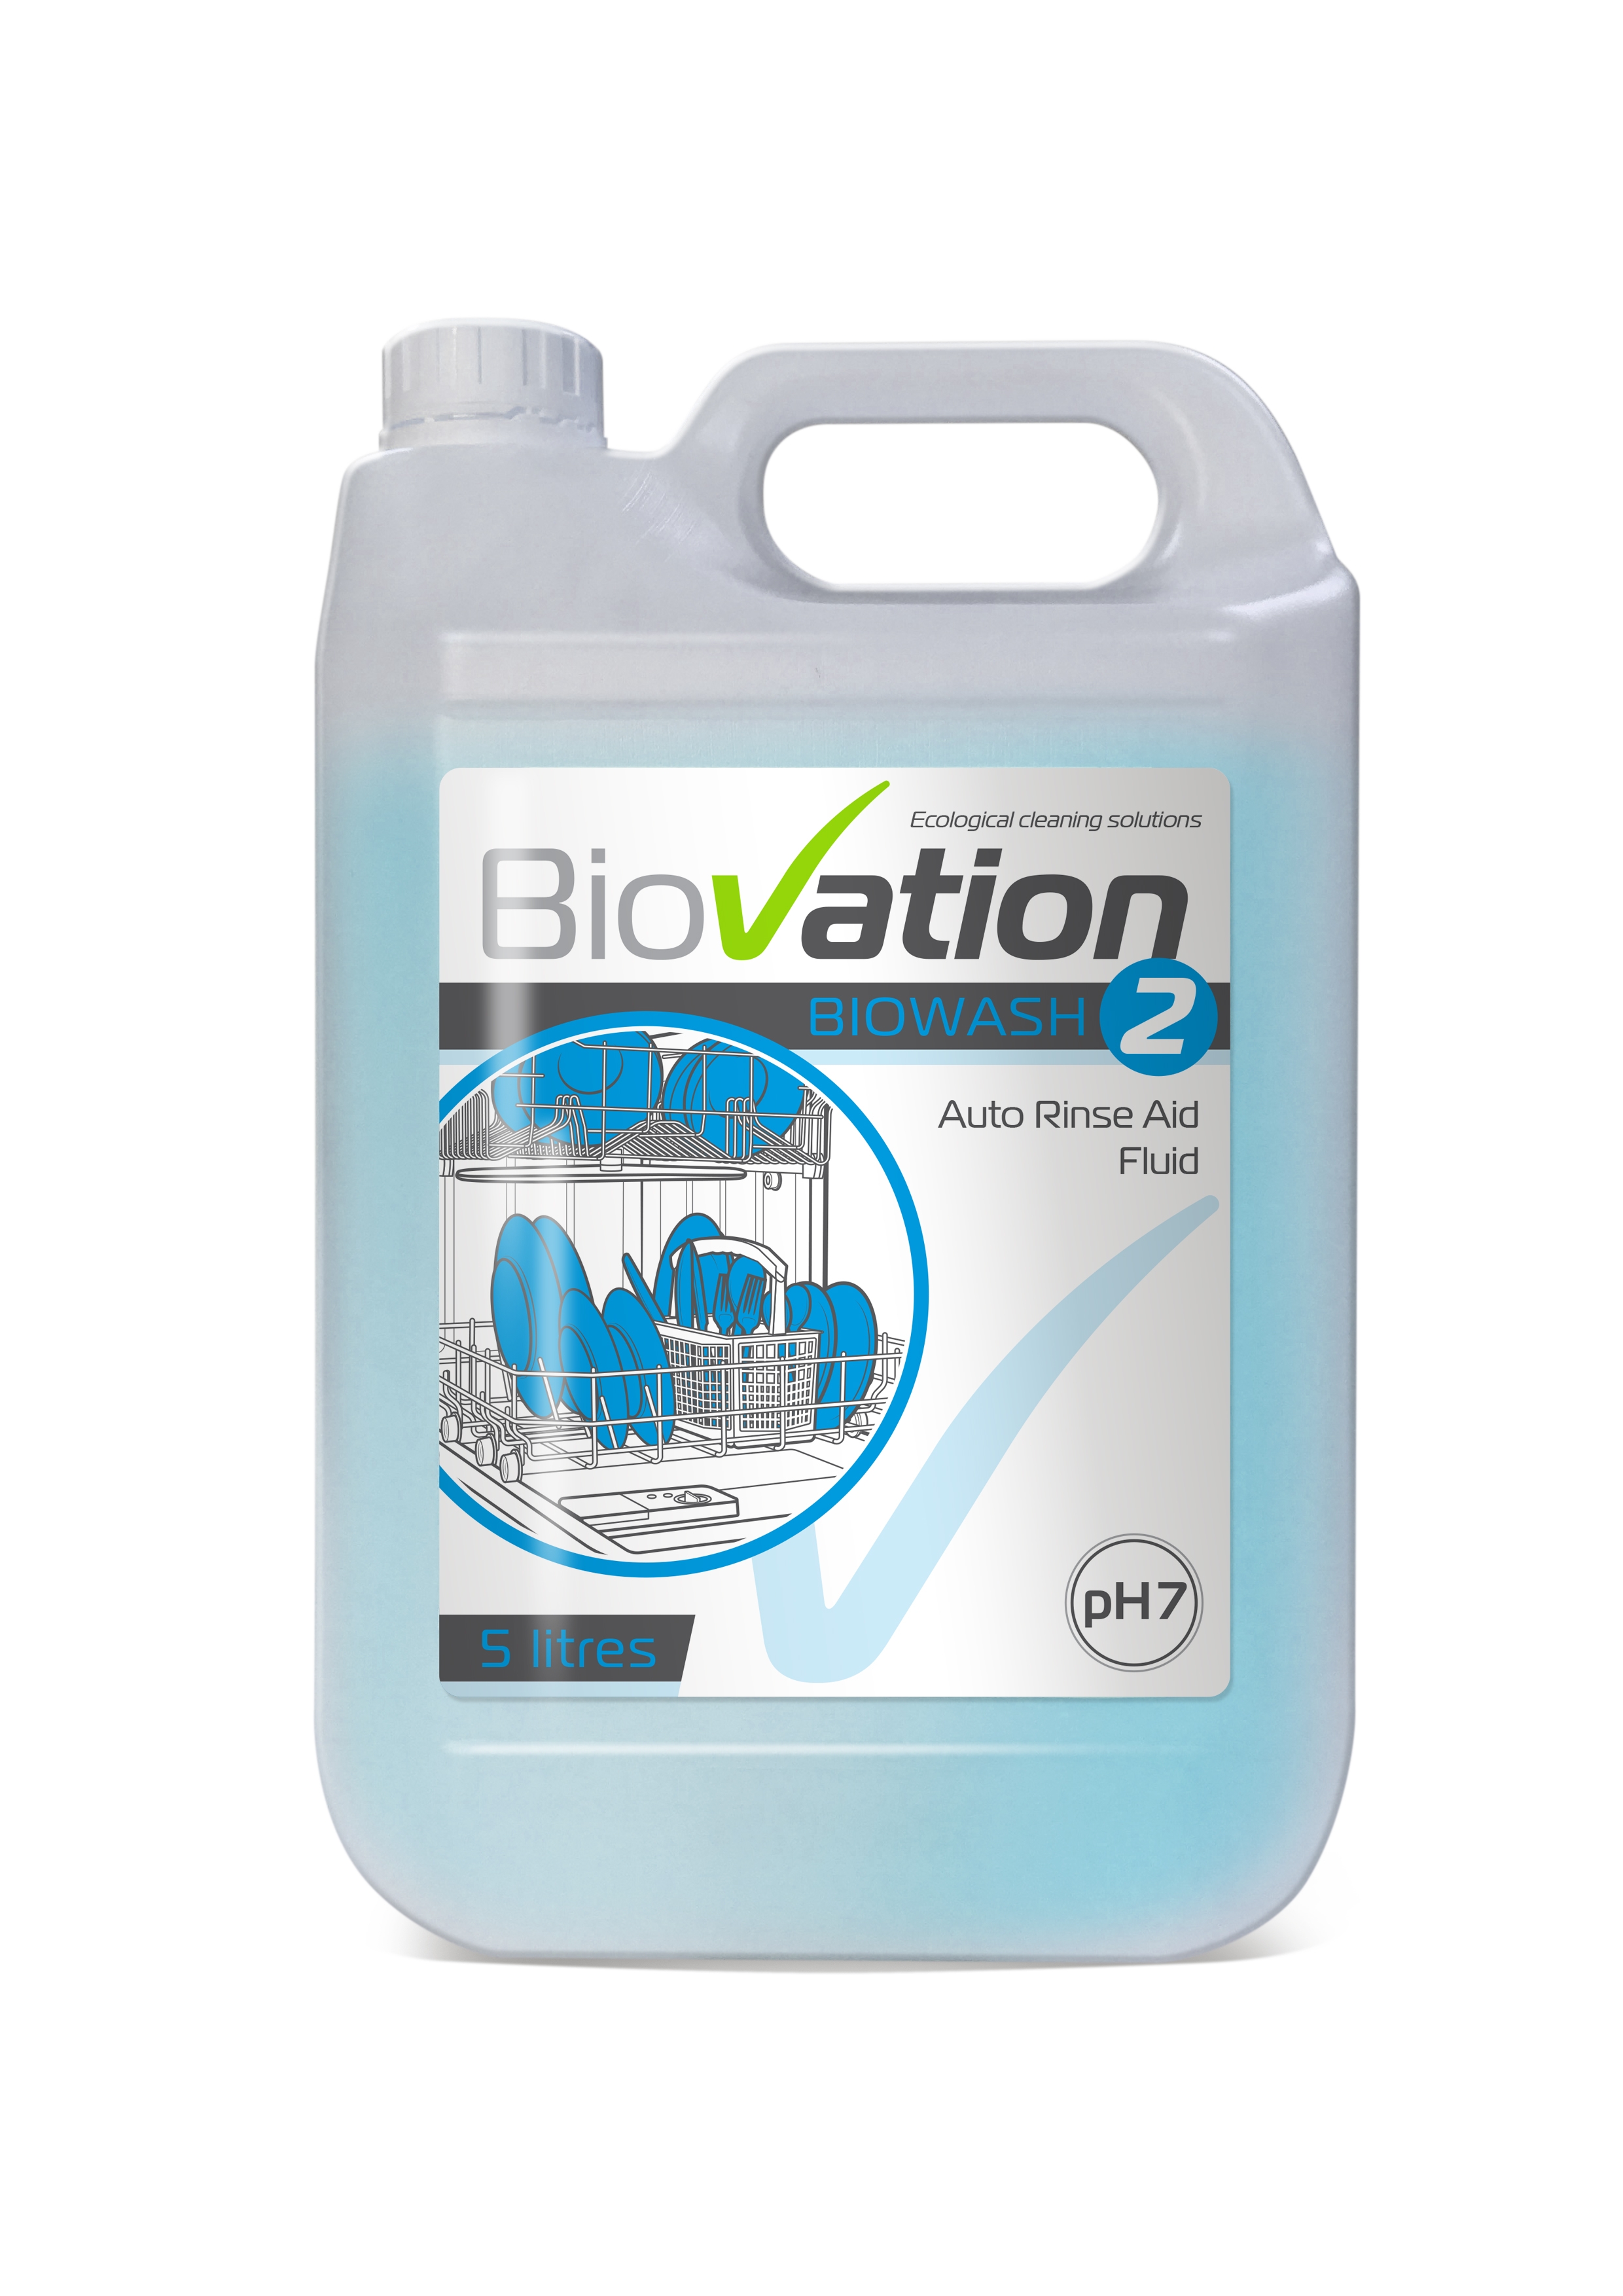 Biowash 2 Auto Rinse Aid Fluid 5 litres